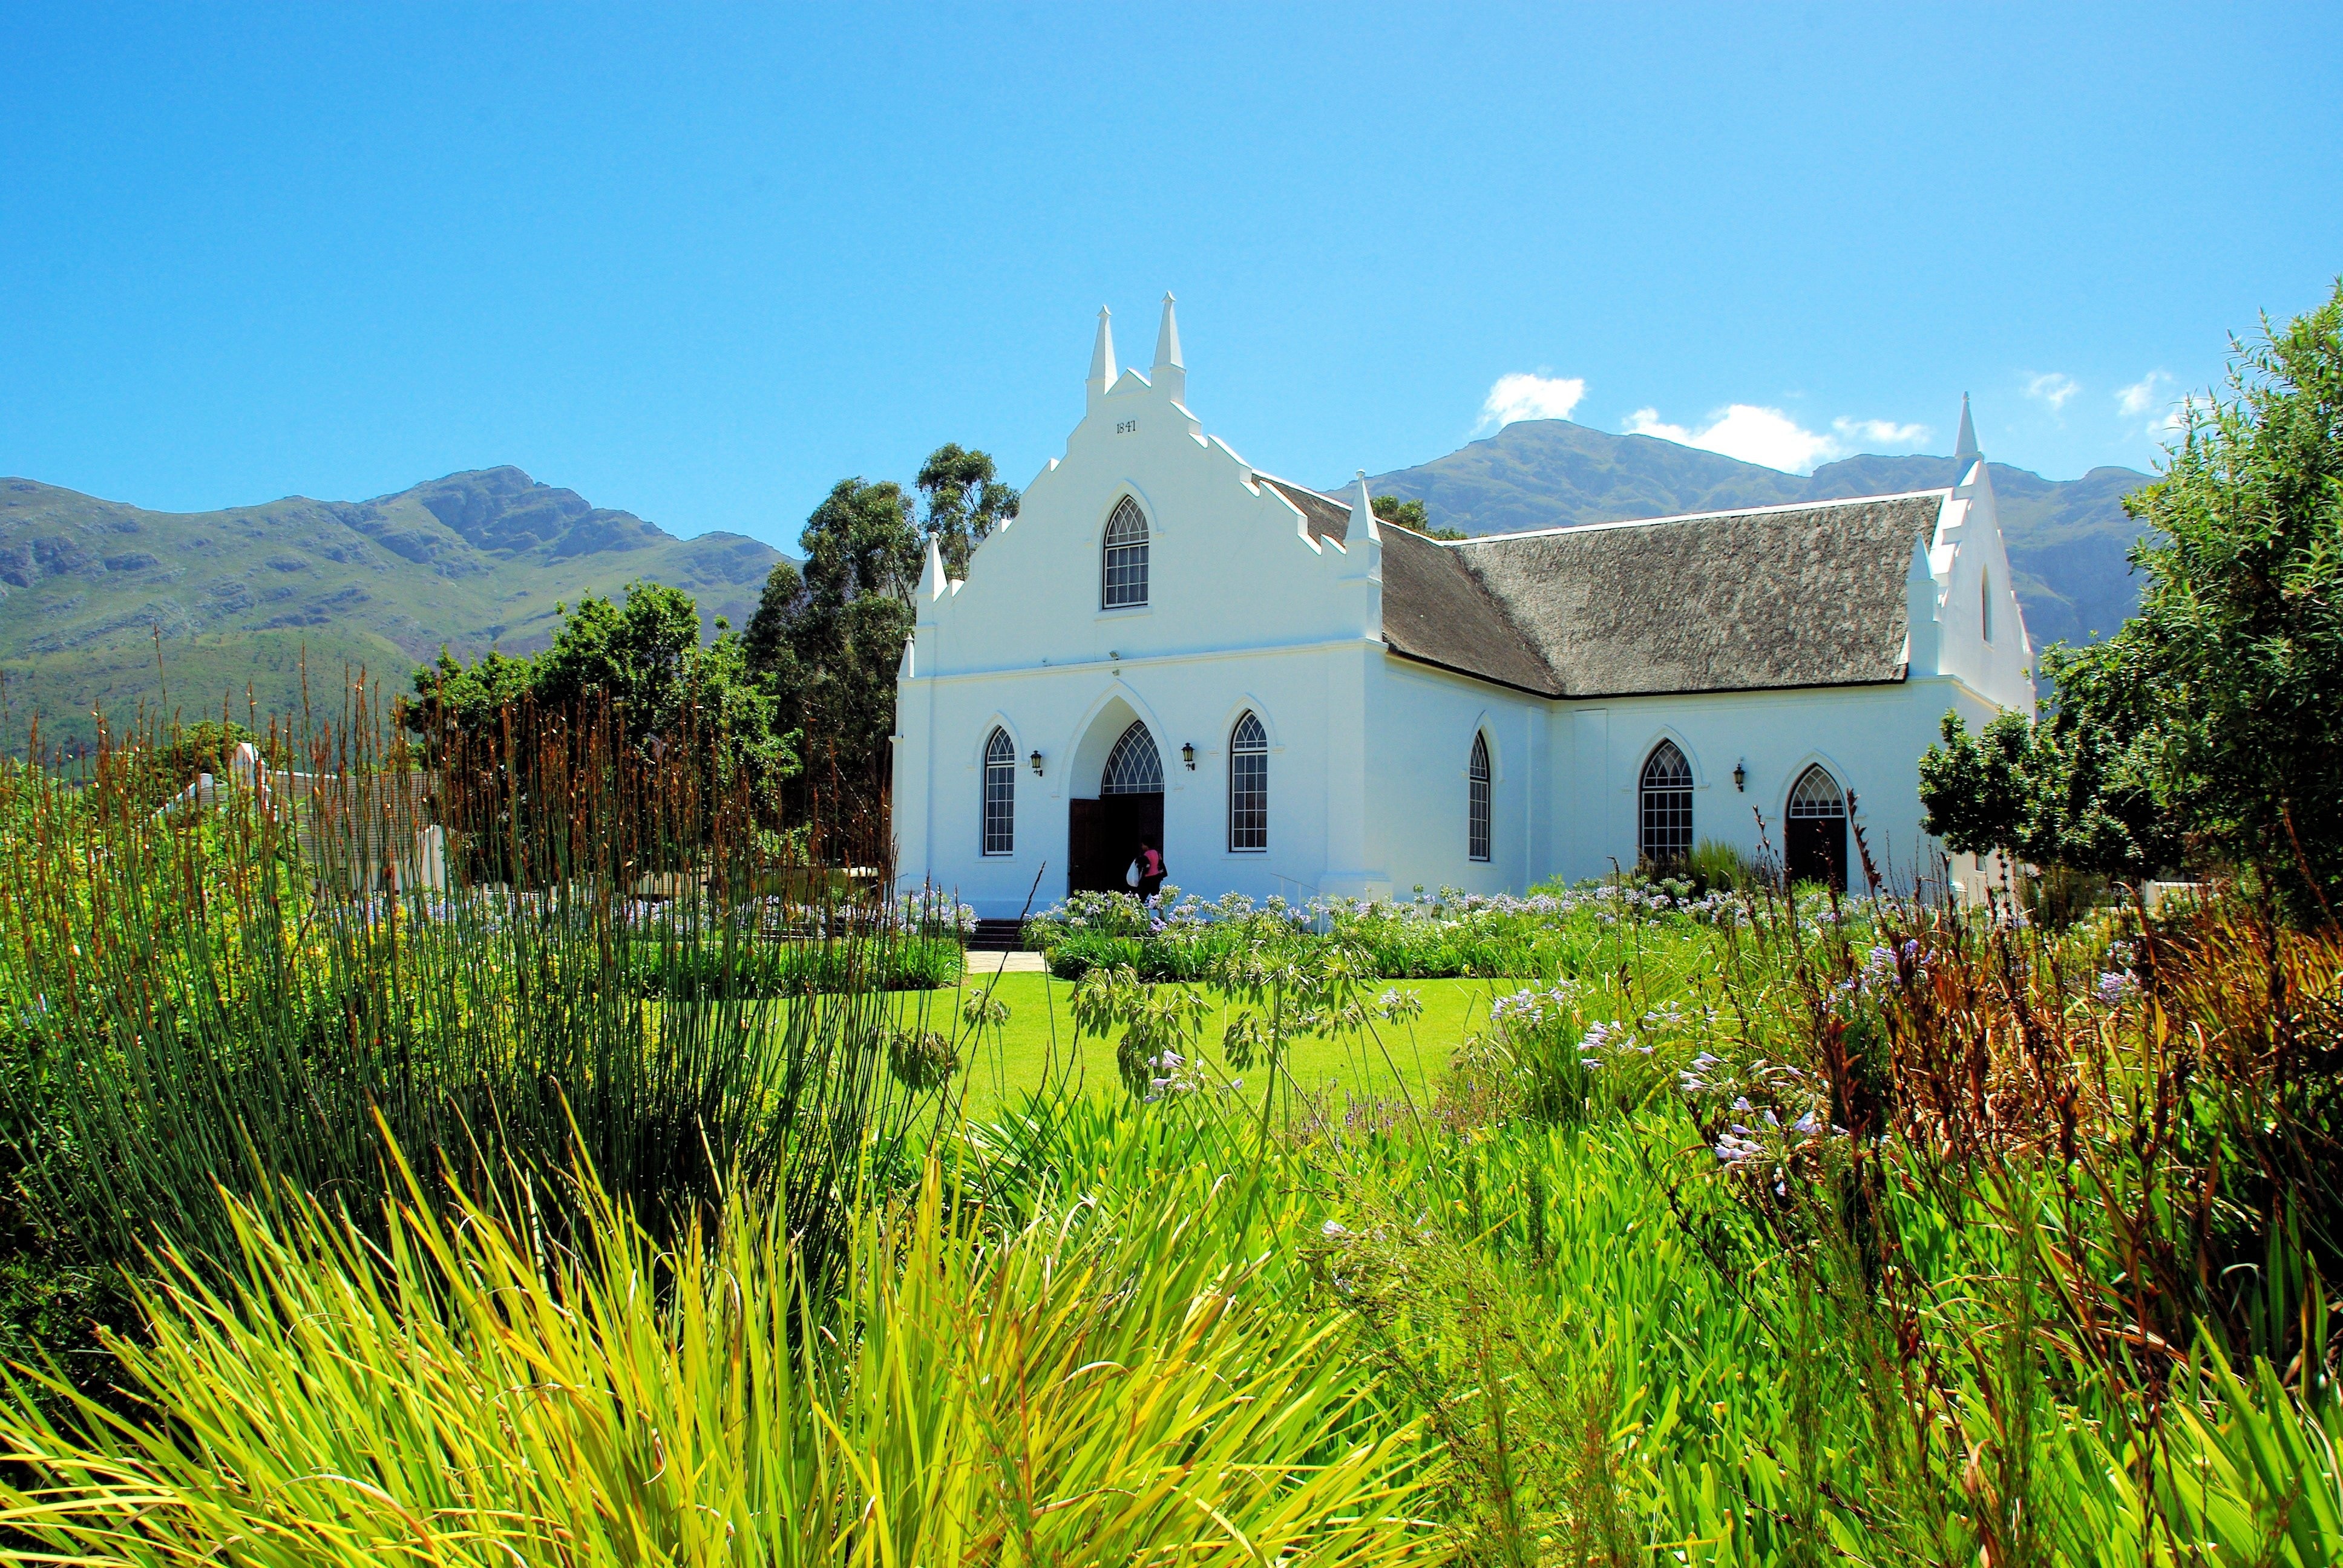 South Africa, Franshoeck, The Cap, house, rural scene